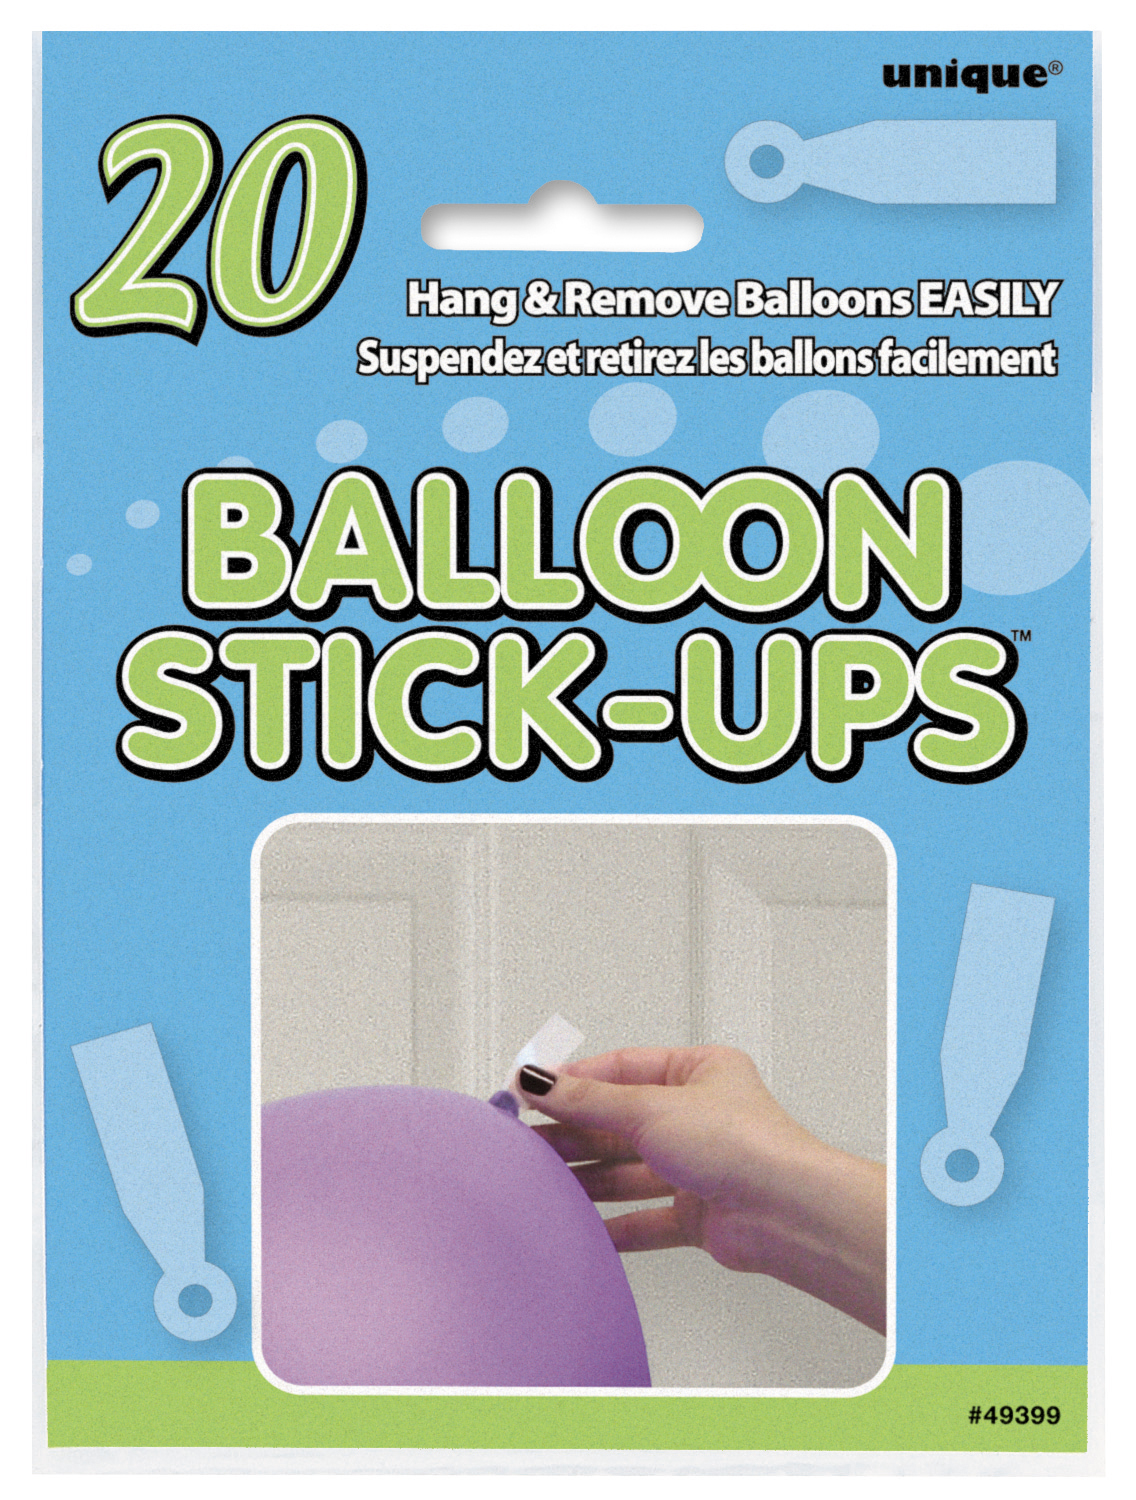 Balloon Stick-Ups (20pk)